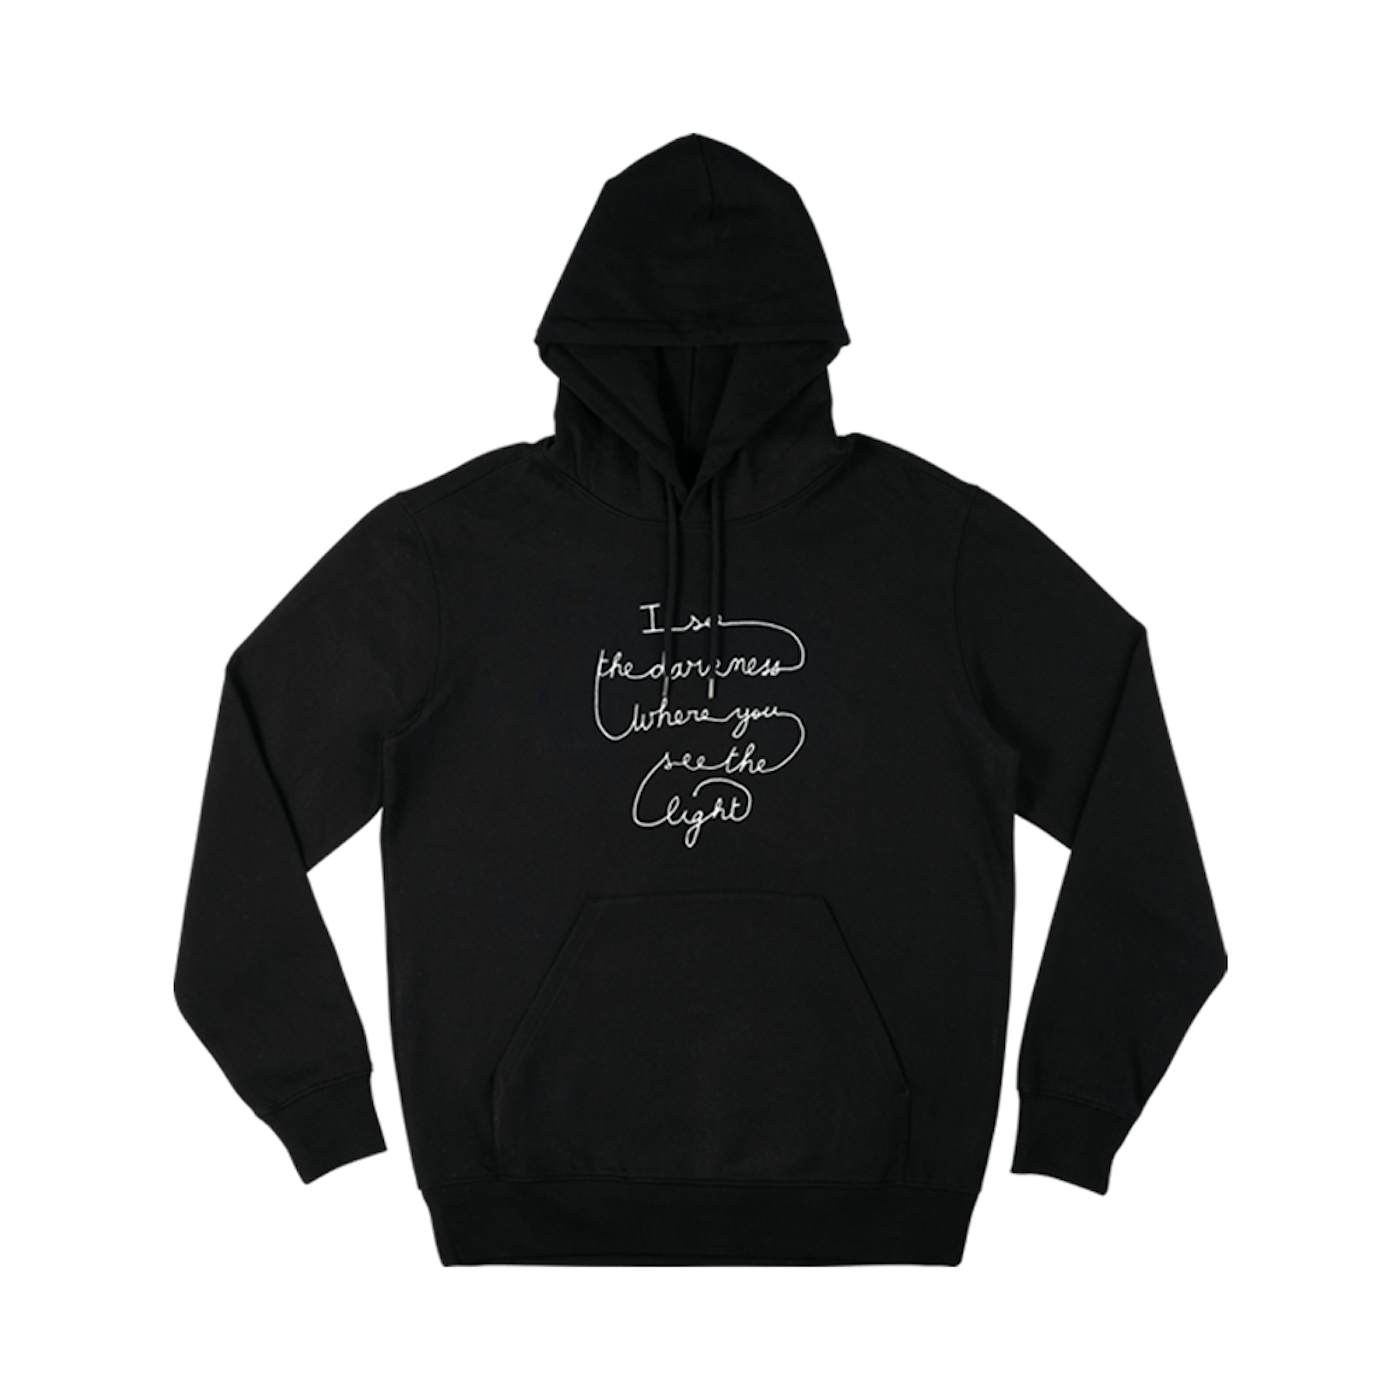 Tom Odell Black Friday embroidered lyric hoodie